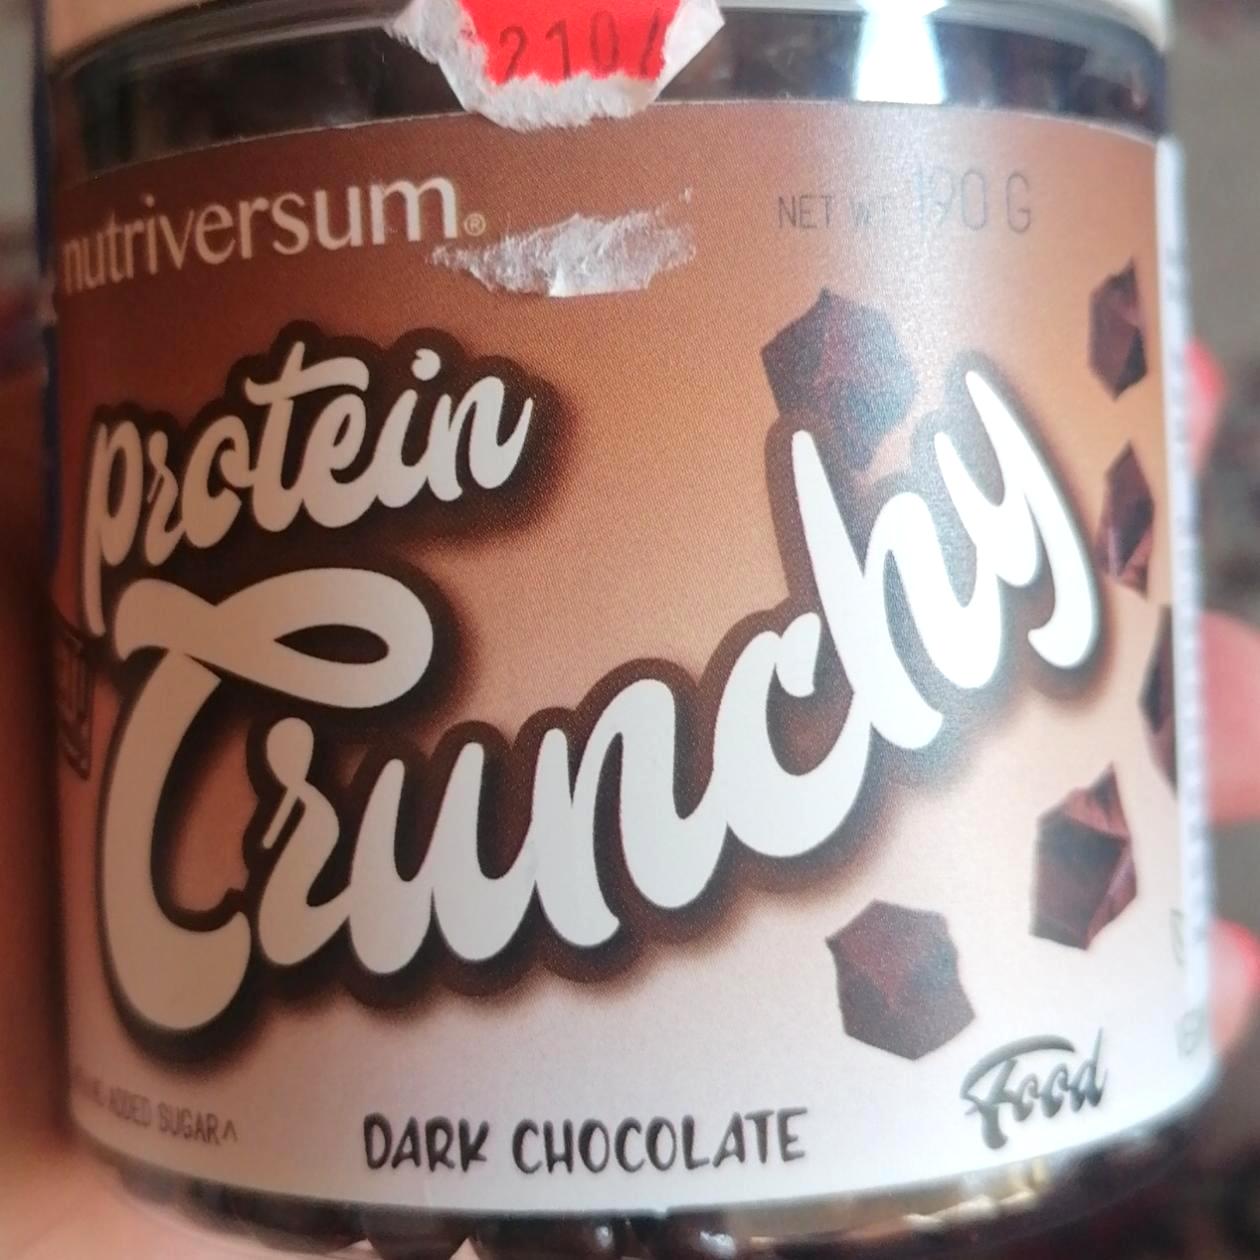 Képek - Protein Crunchy Dark chocolate Nutriversum